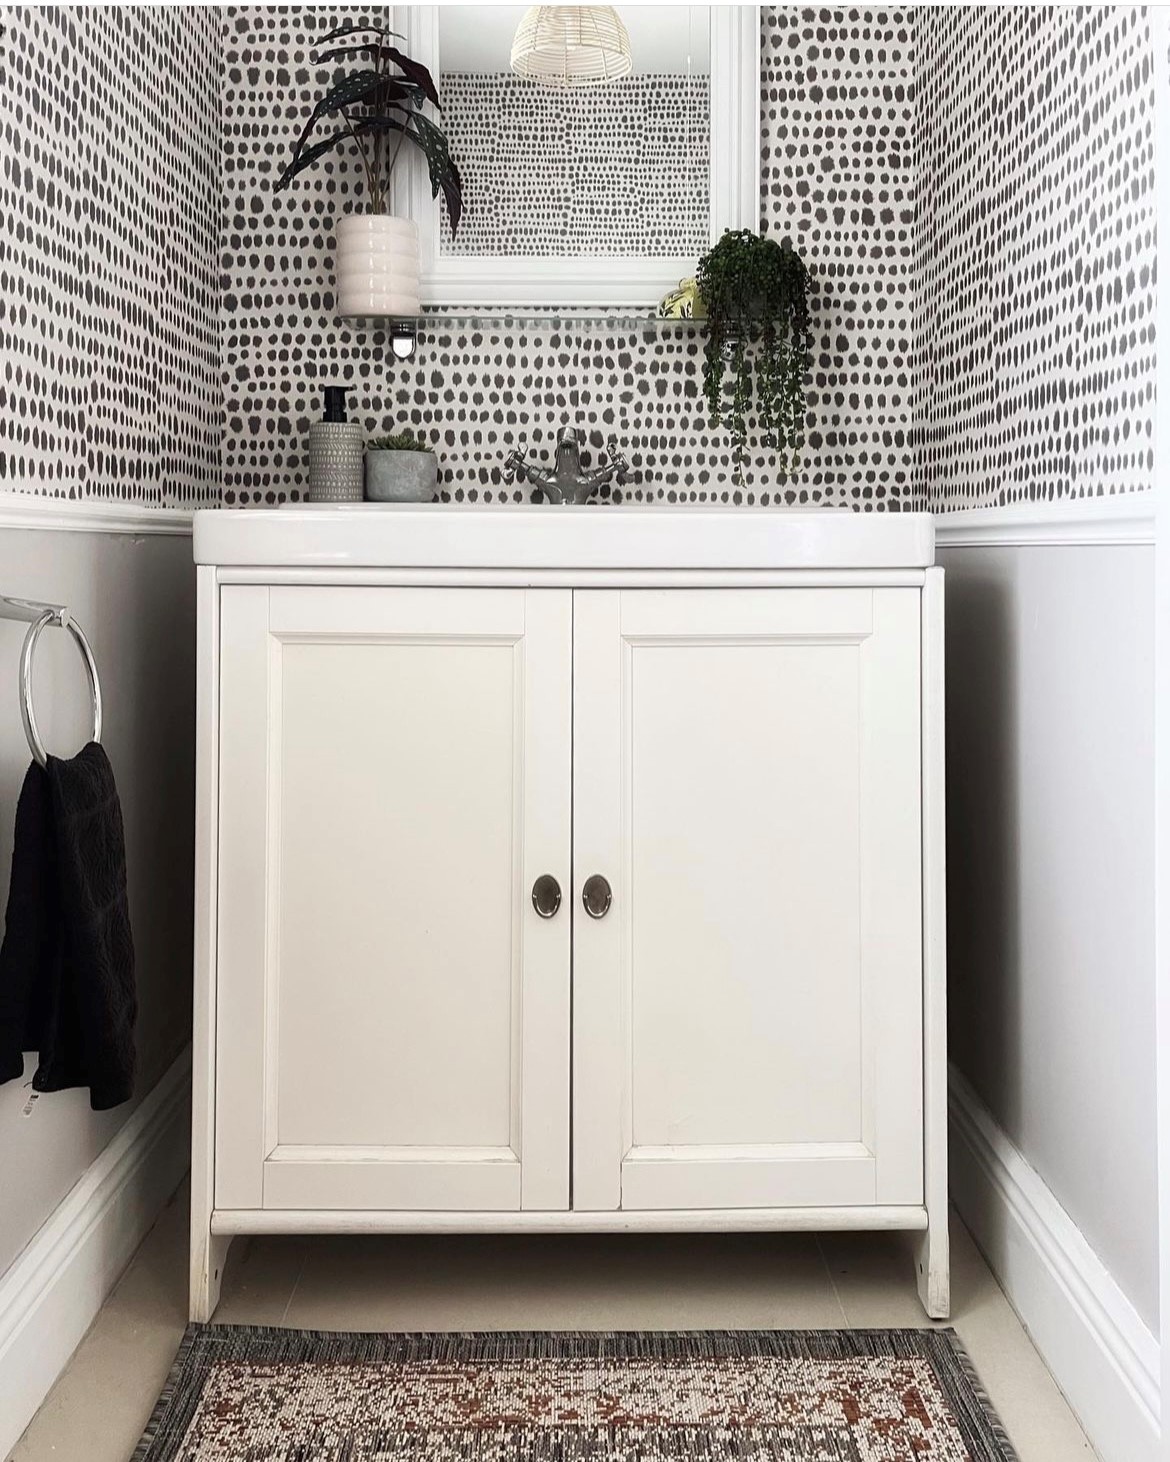 Can You Wallpaper A Bathroom?